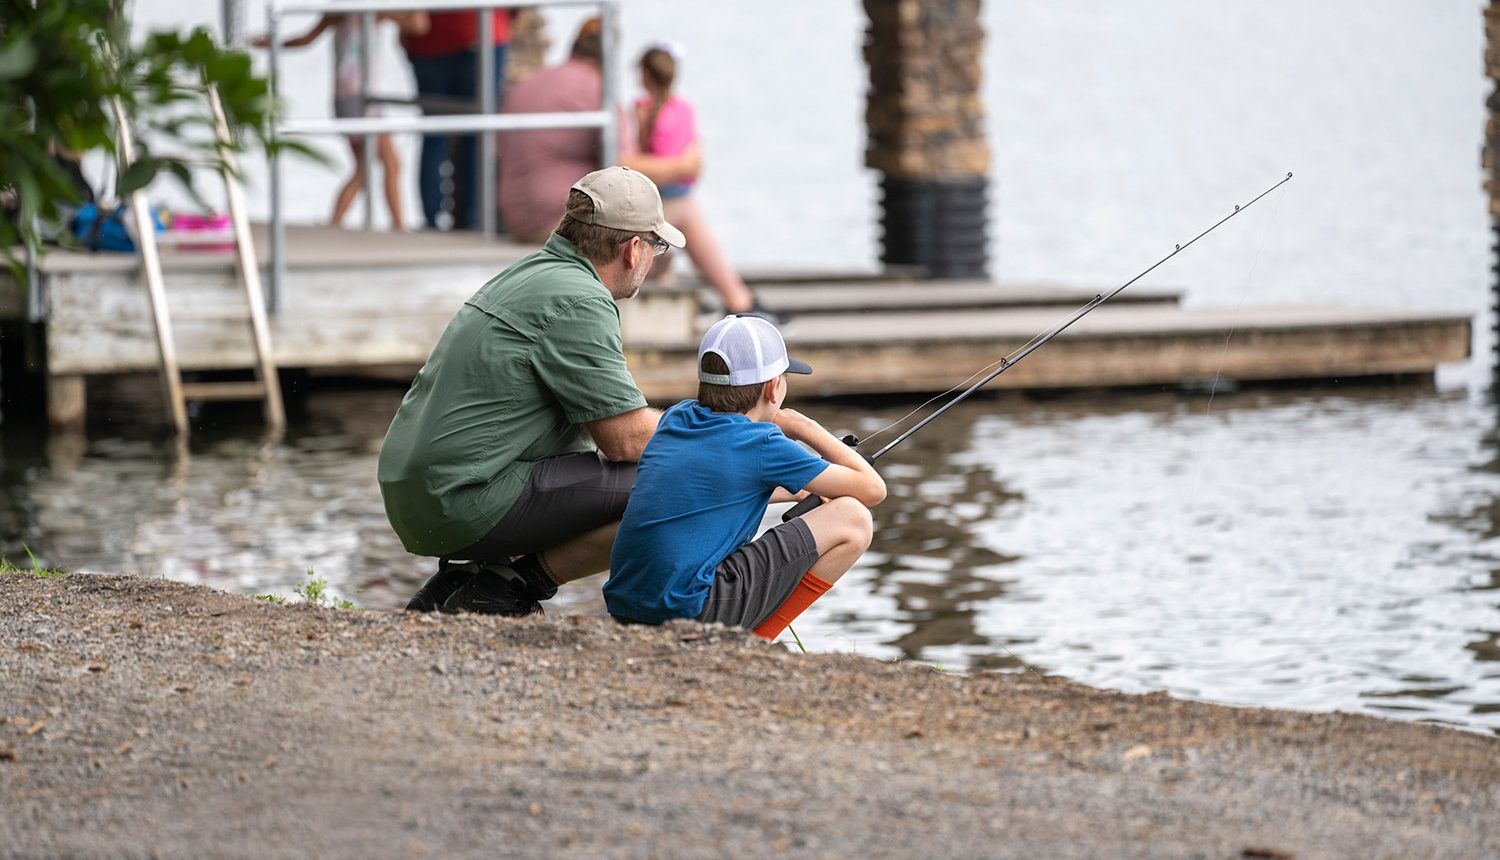 Father and son fishing at Paris Lake.